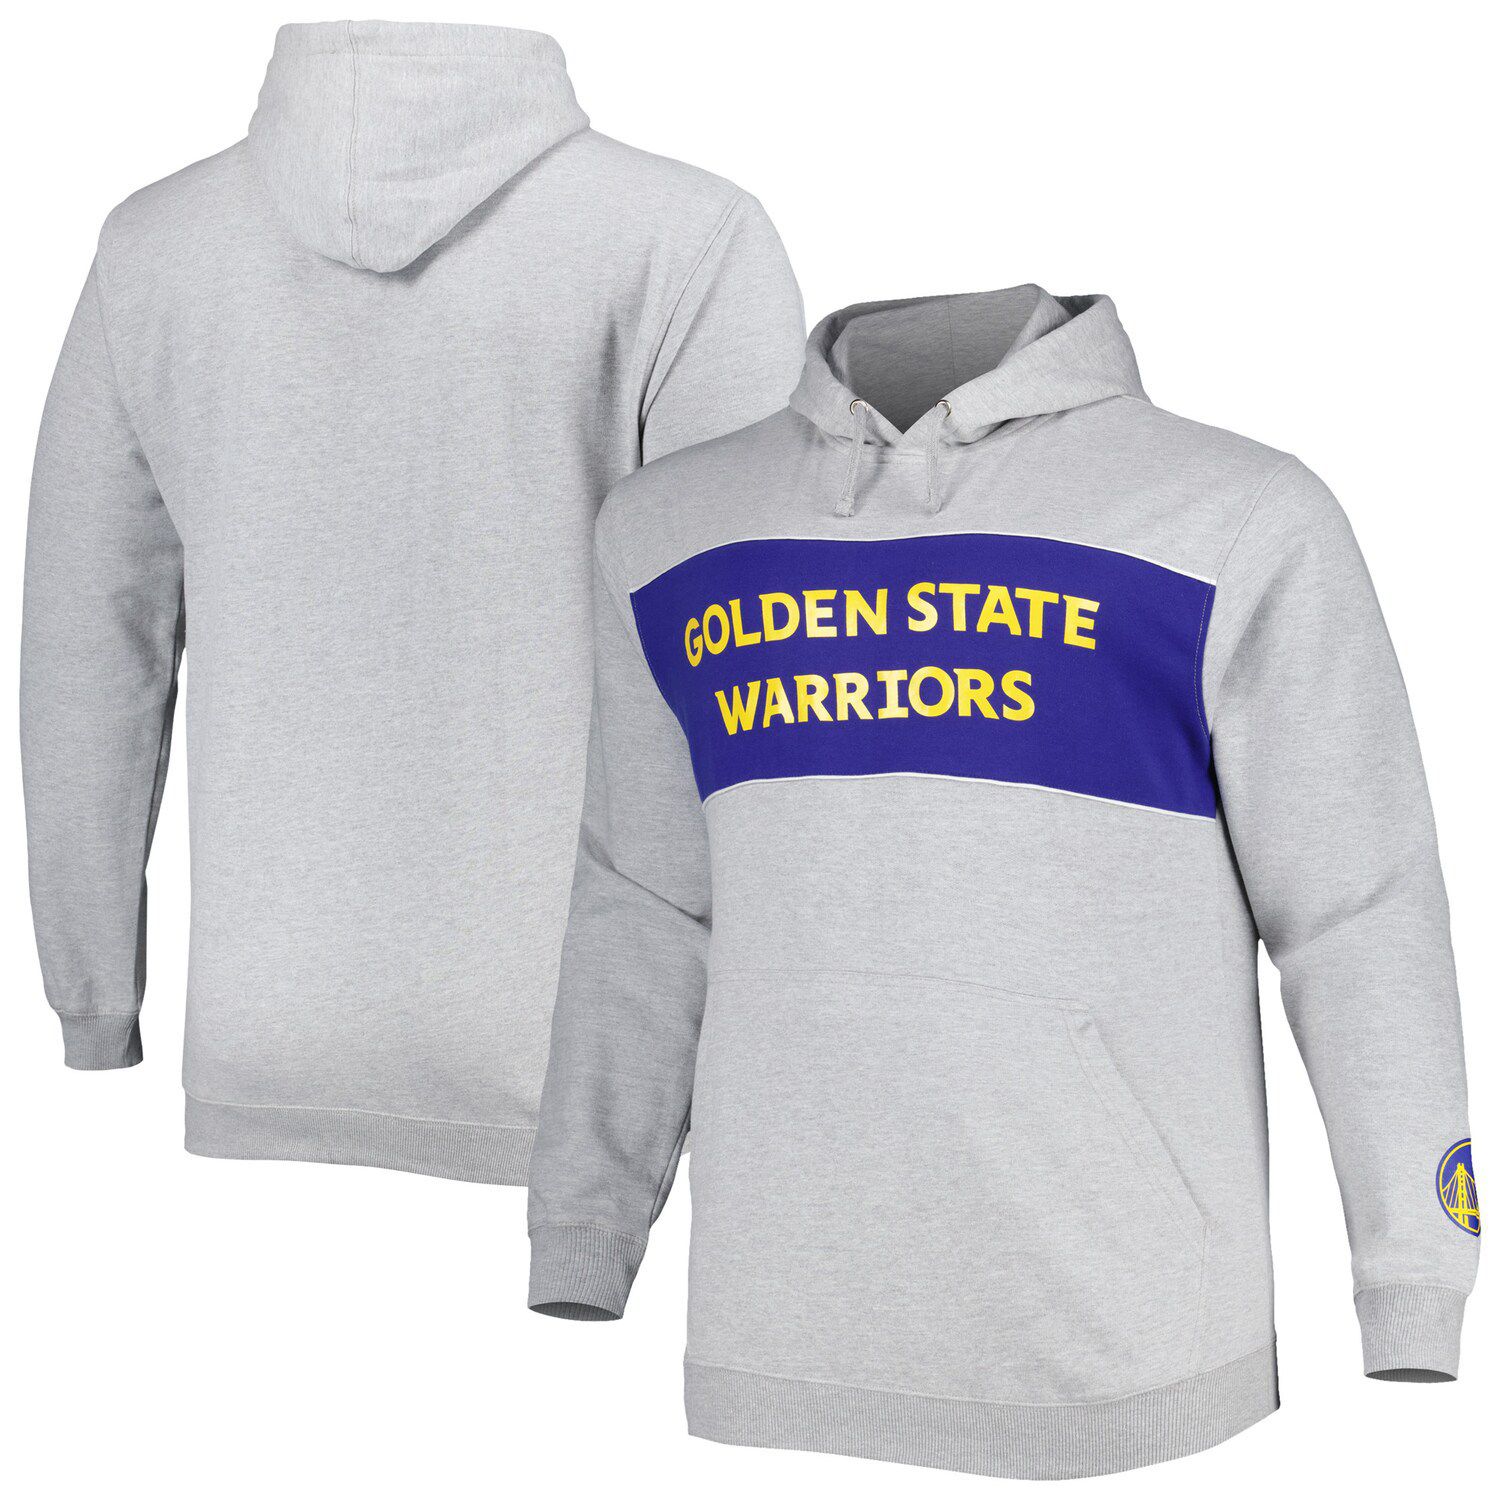 Golden State Warriors Nike Women's Club Tri-Blend Pullover Hoodie